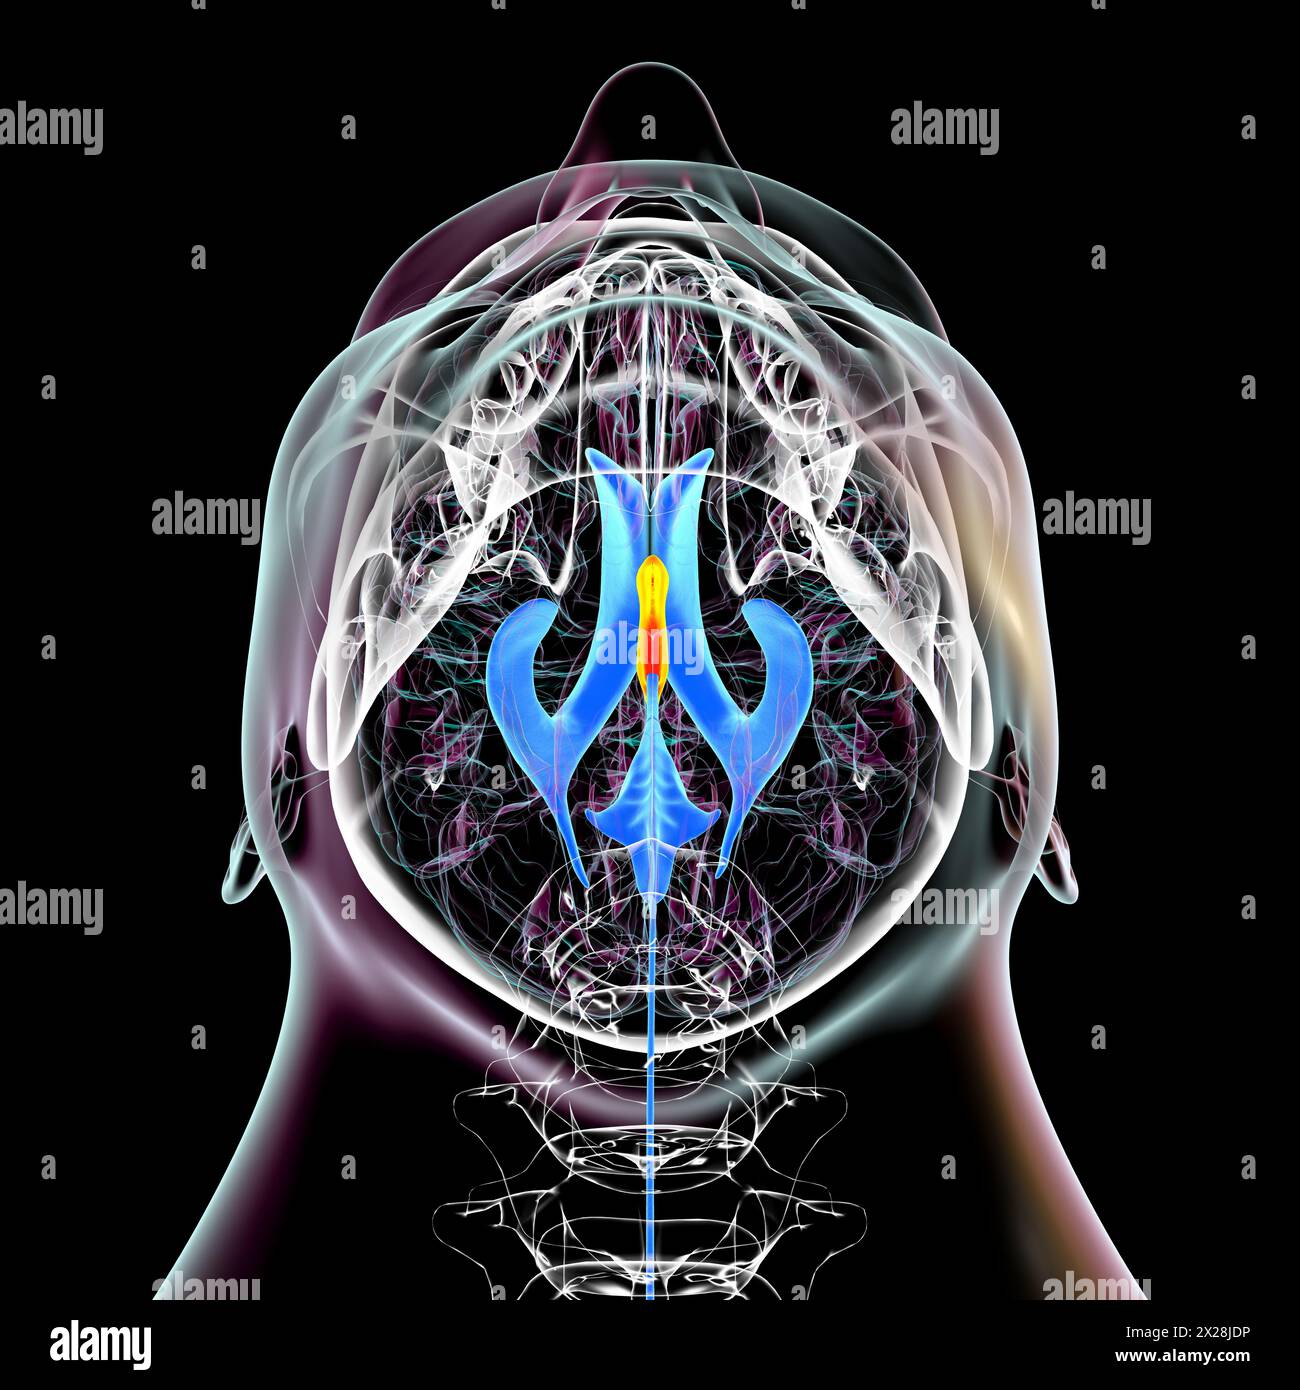 Third brain ventricle, illustration Stock Photo